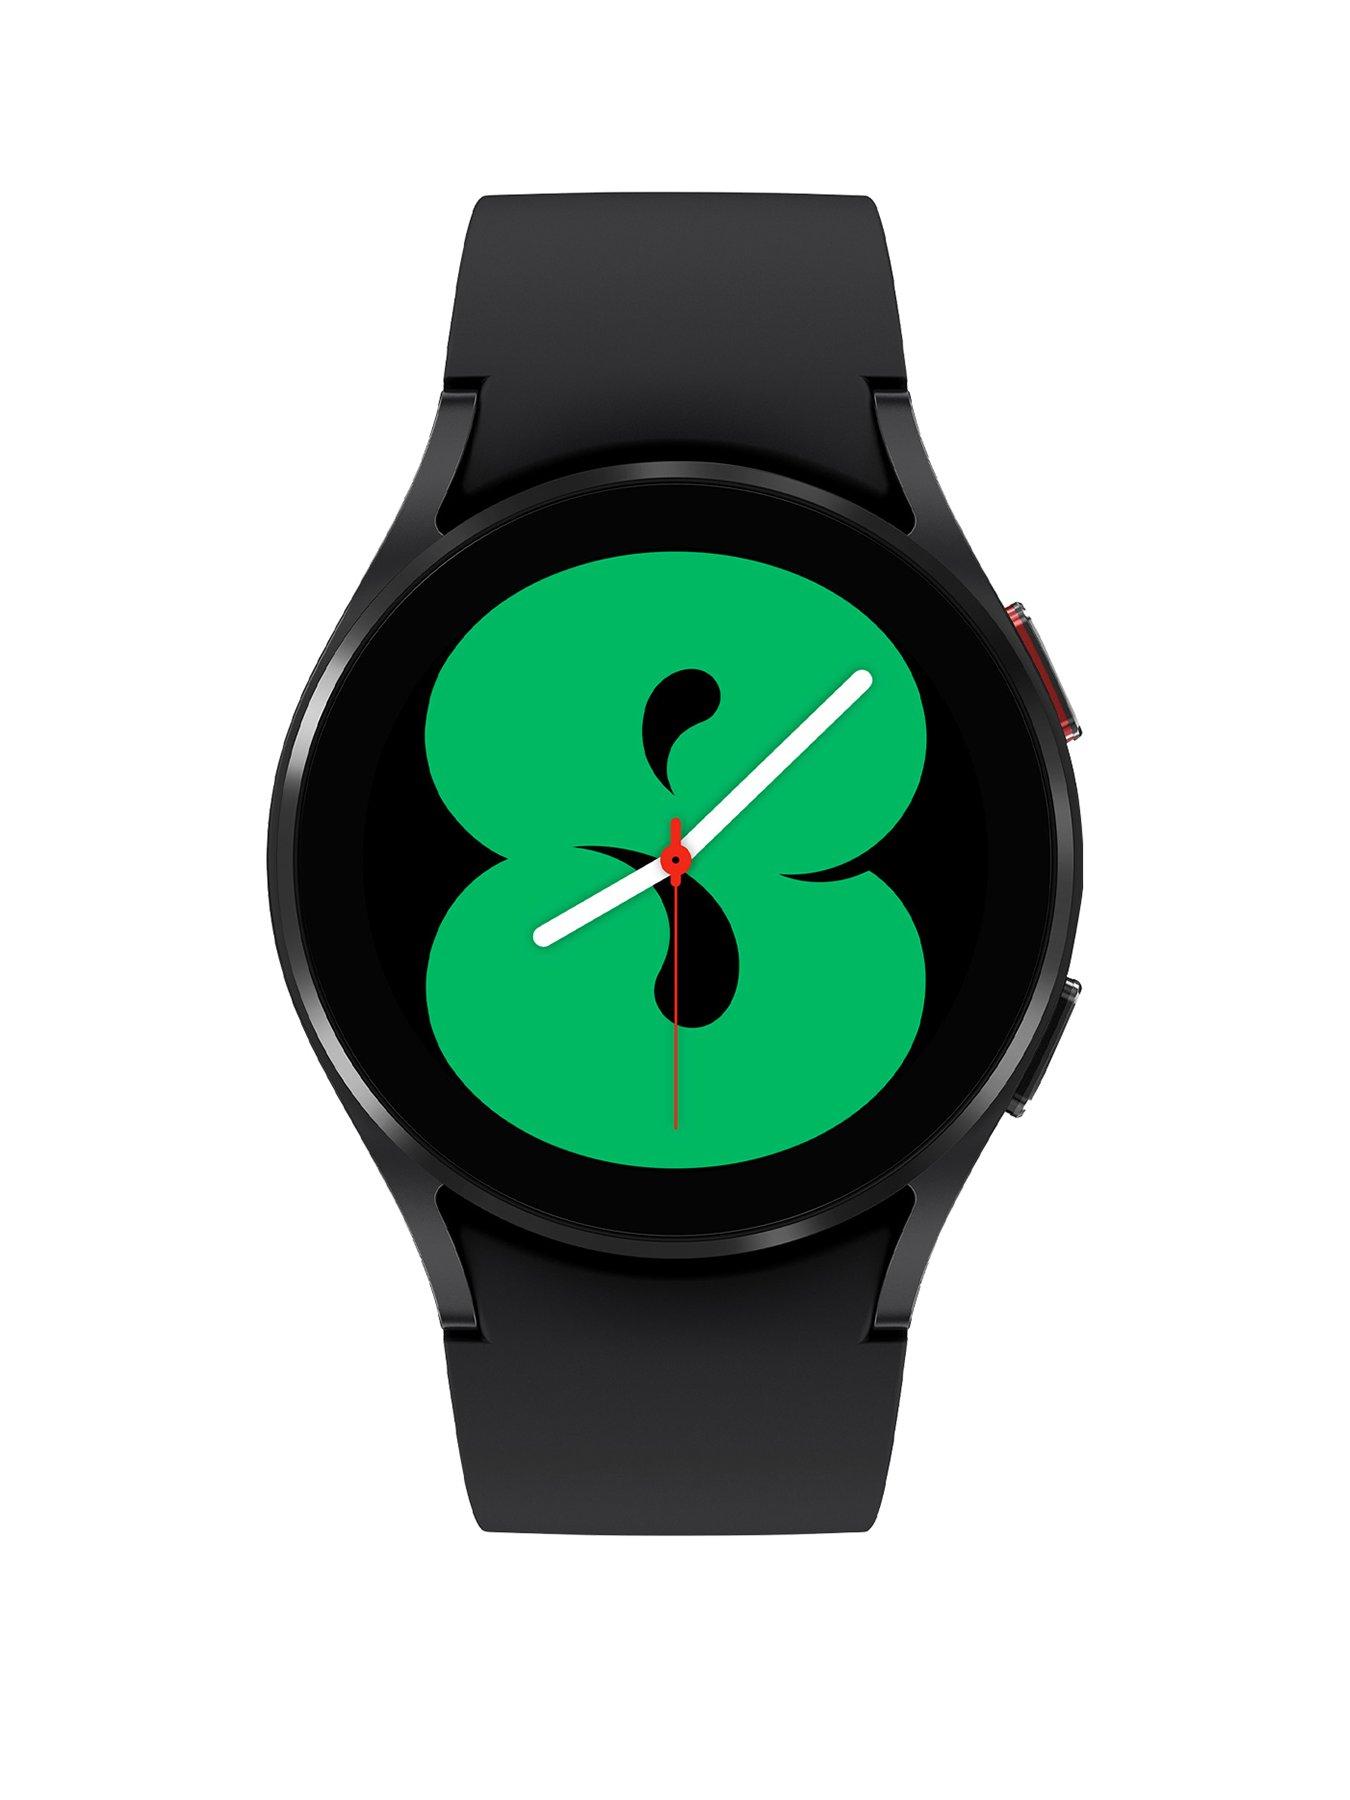 Smart Watches, Apple, Fitbit, Garmin & More